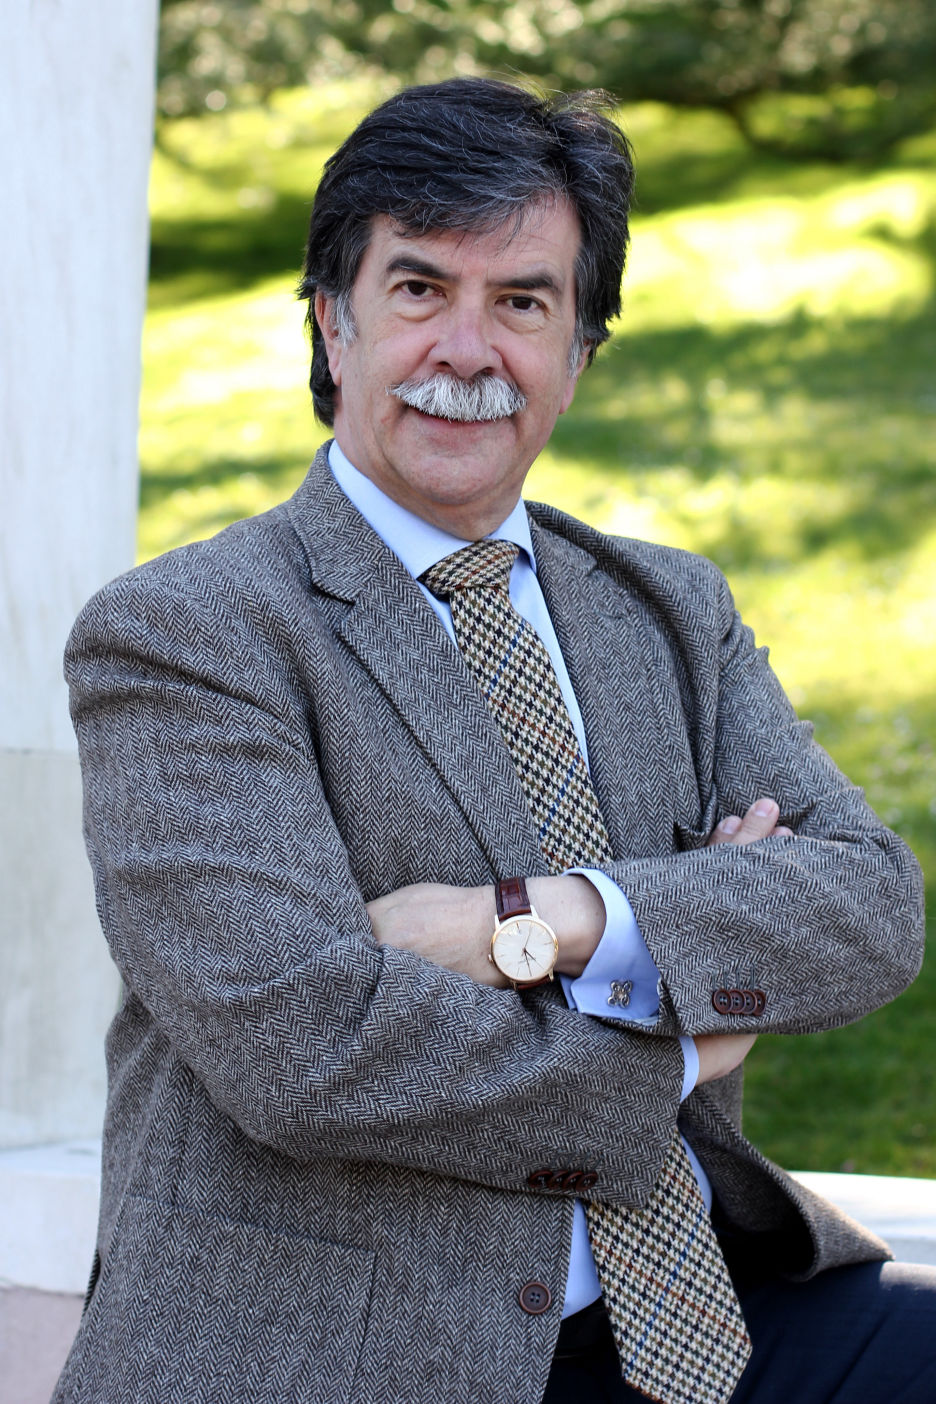 Dr. Javier Urra Portillo